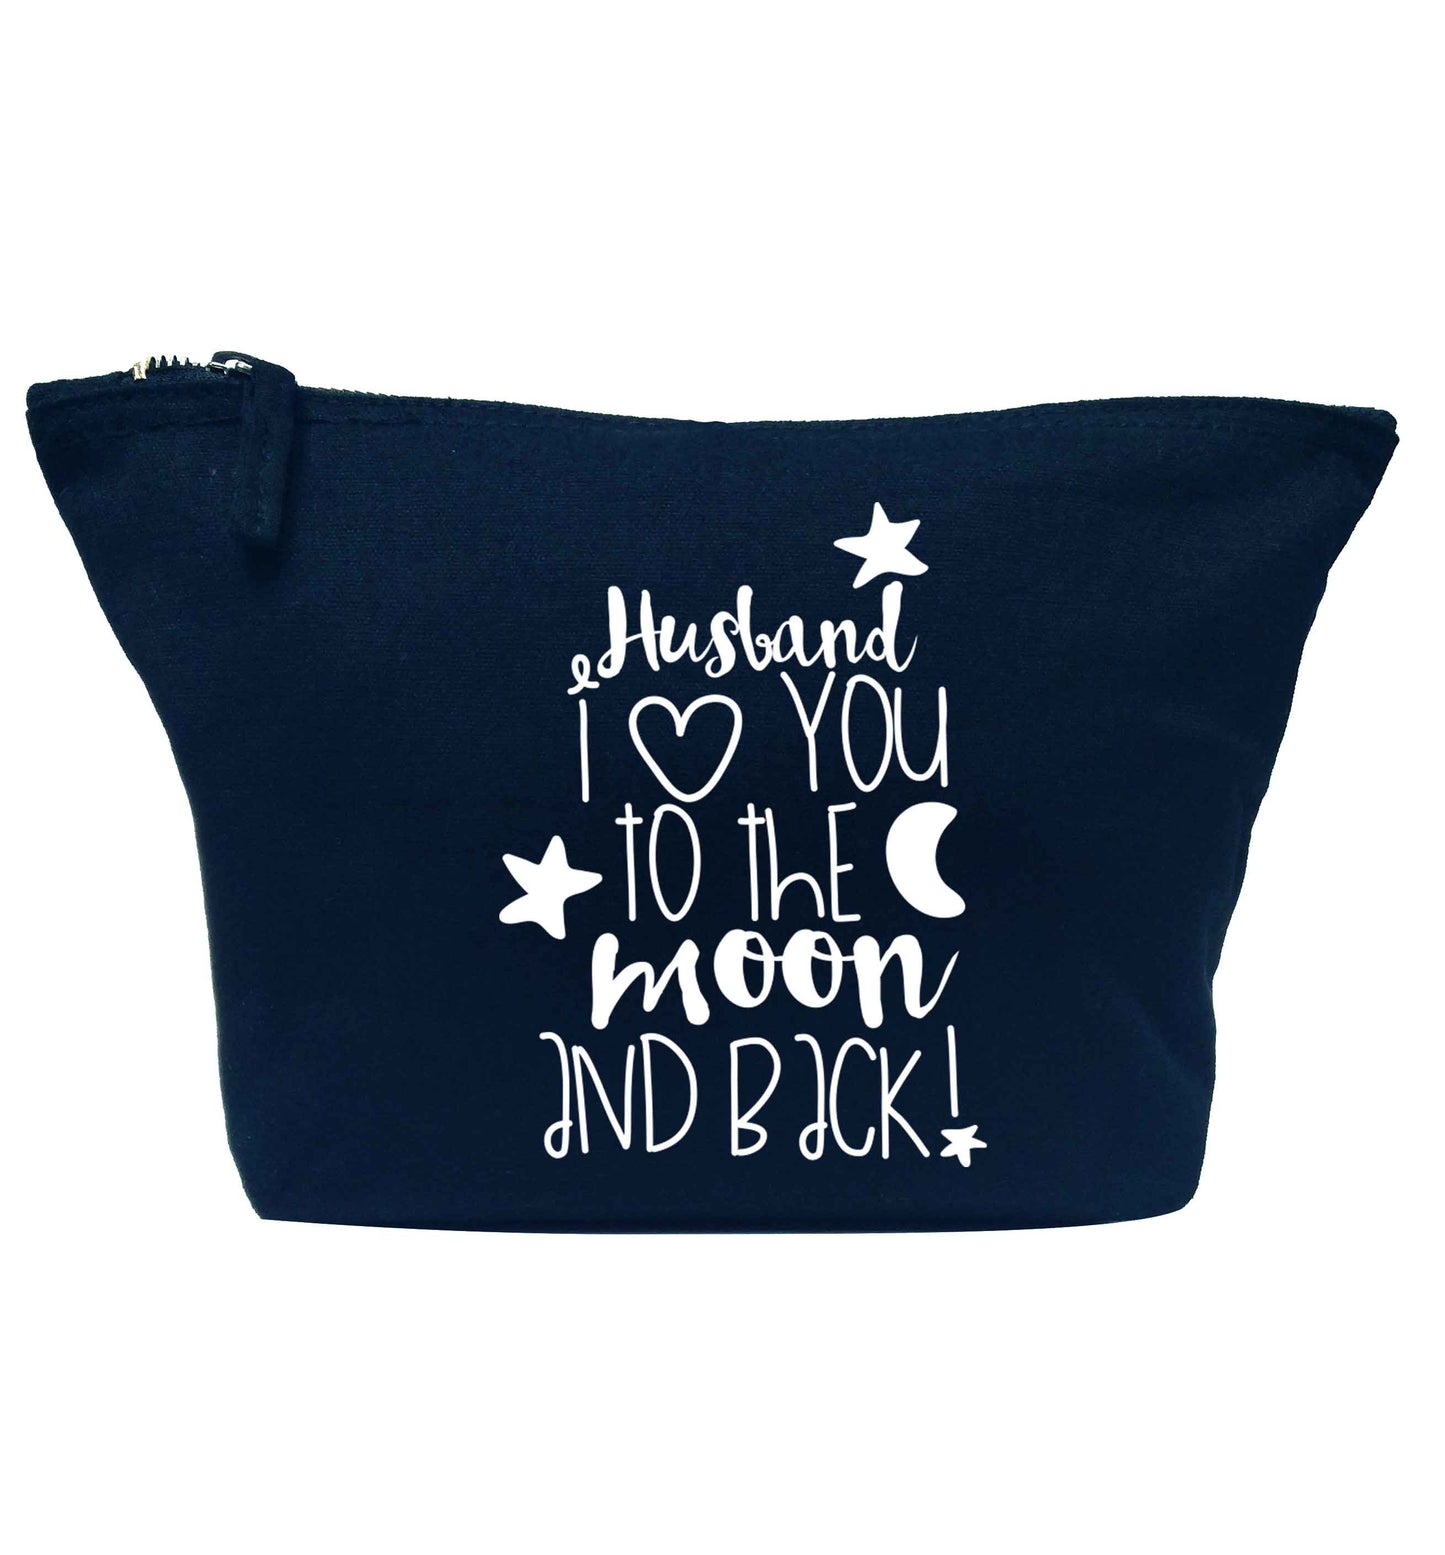 Husband I love you to the moon and back navy makeup bag